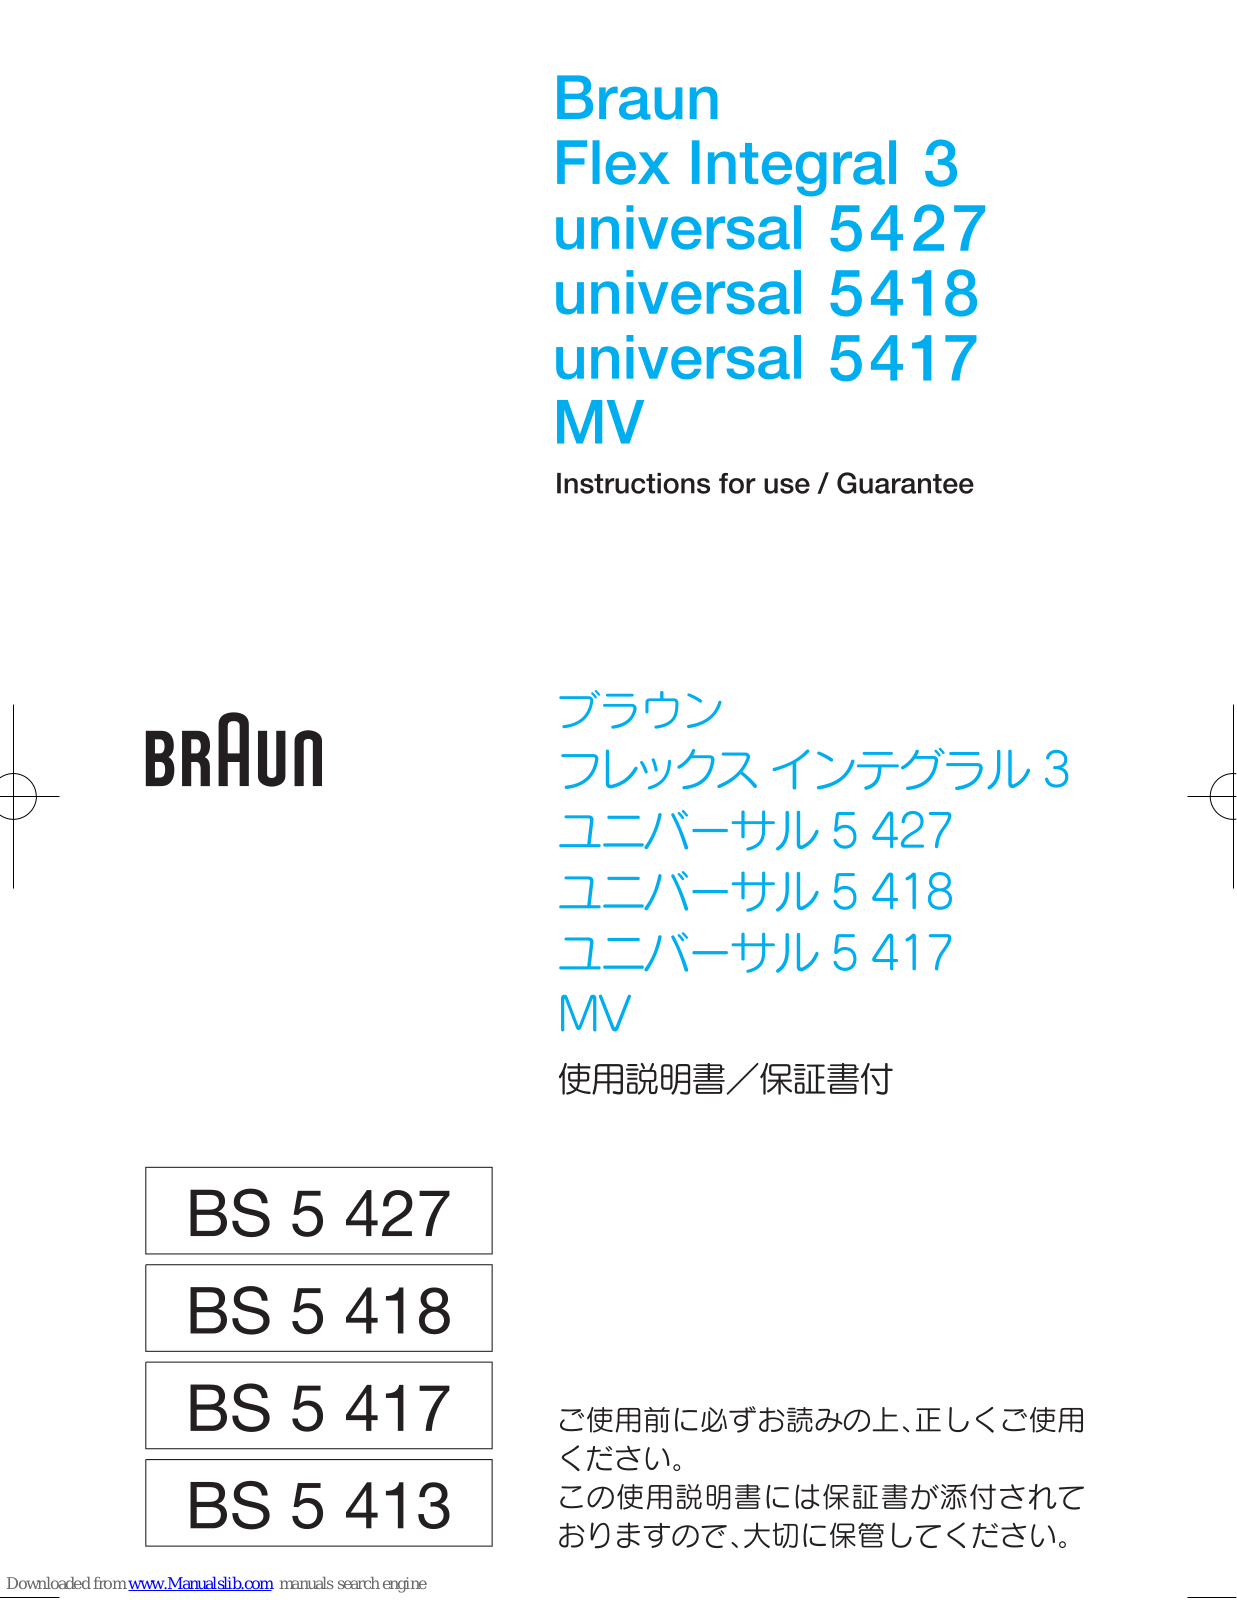 Braun Flex integral 3, universal 5427, universal 5418, MV, universal 5417 Instructions For Use Manual